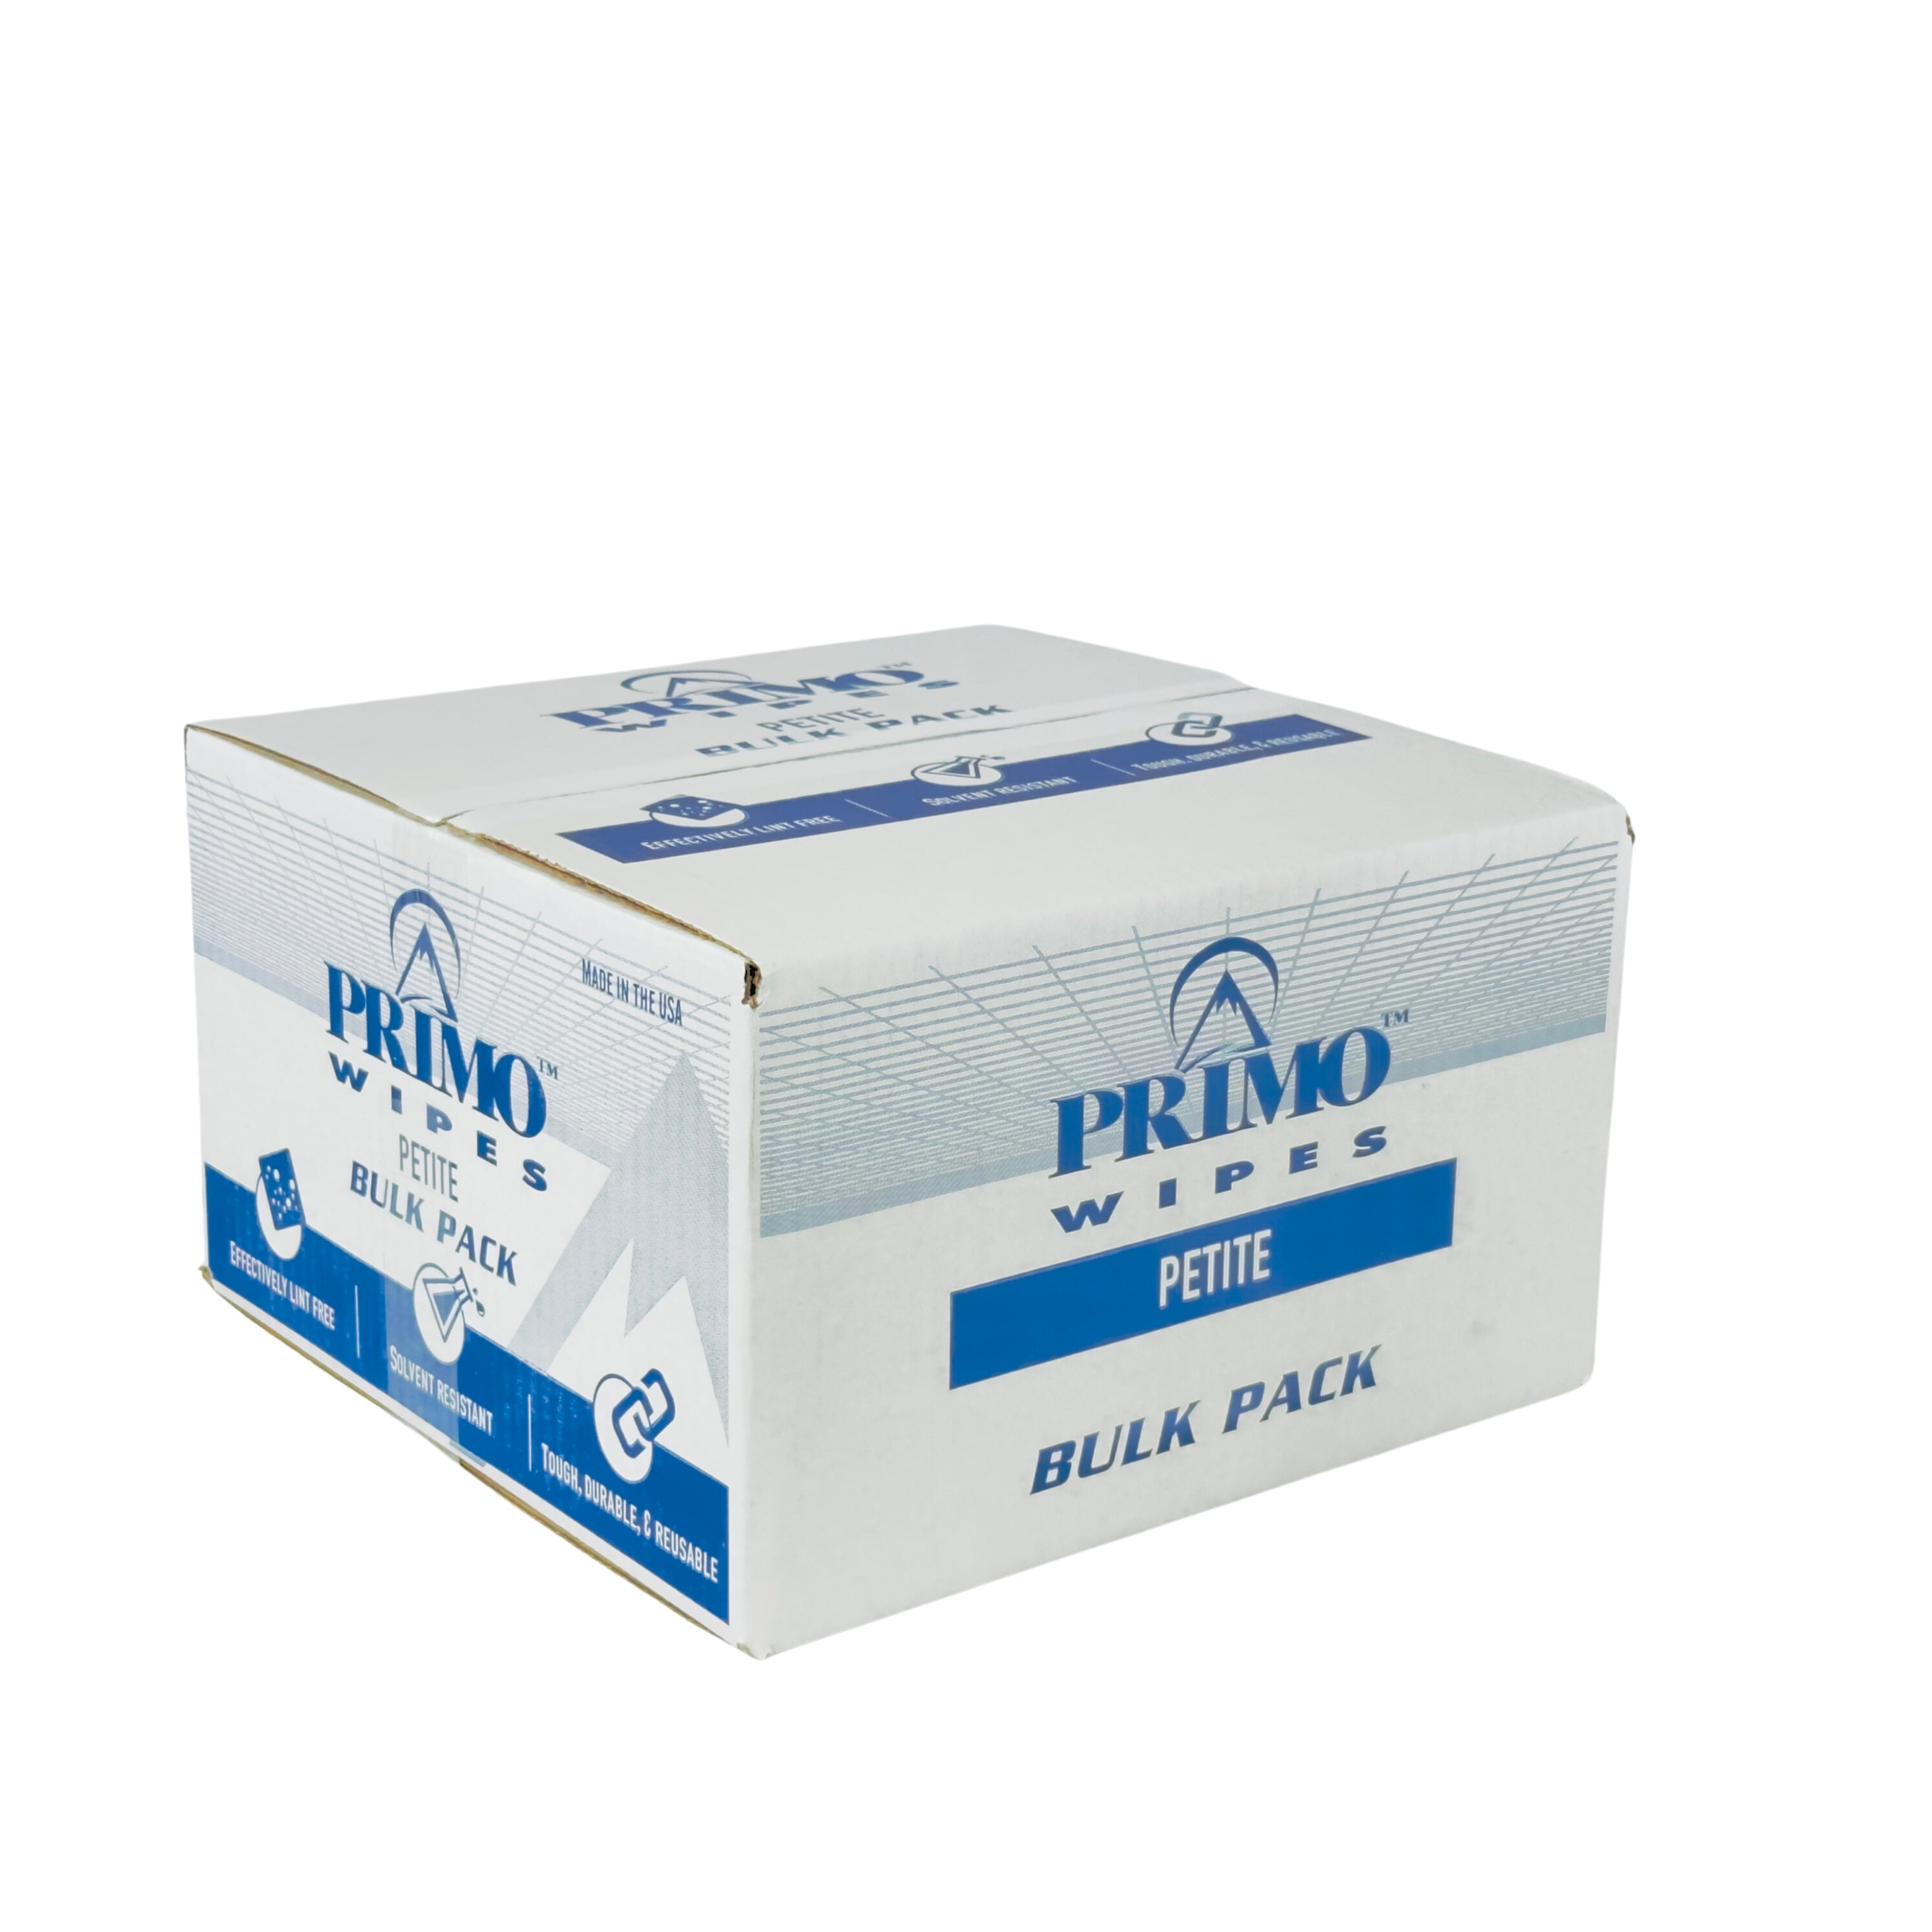 Lint Free Wipes - White 12 x 13 - Premium - Solvent Resistant